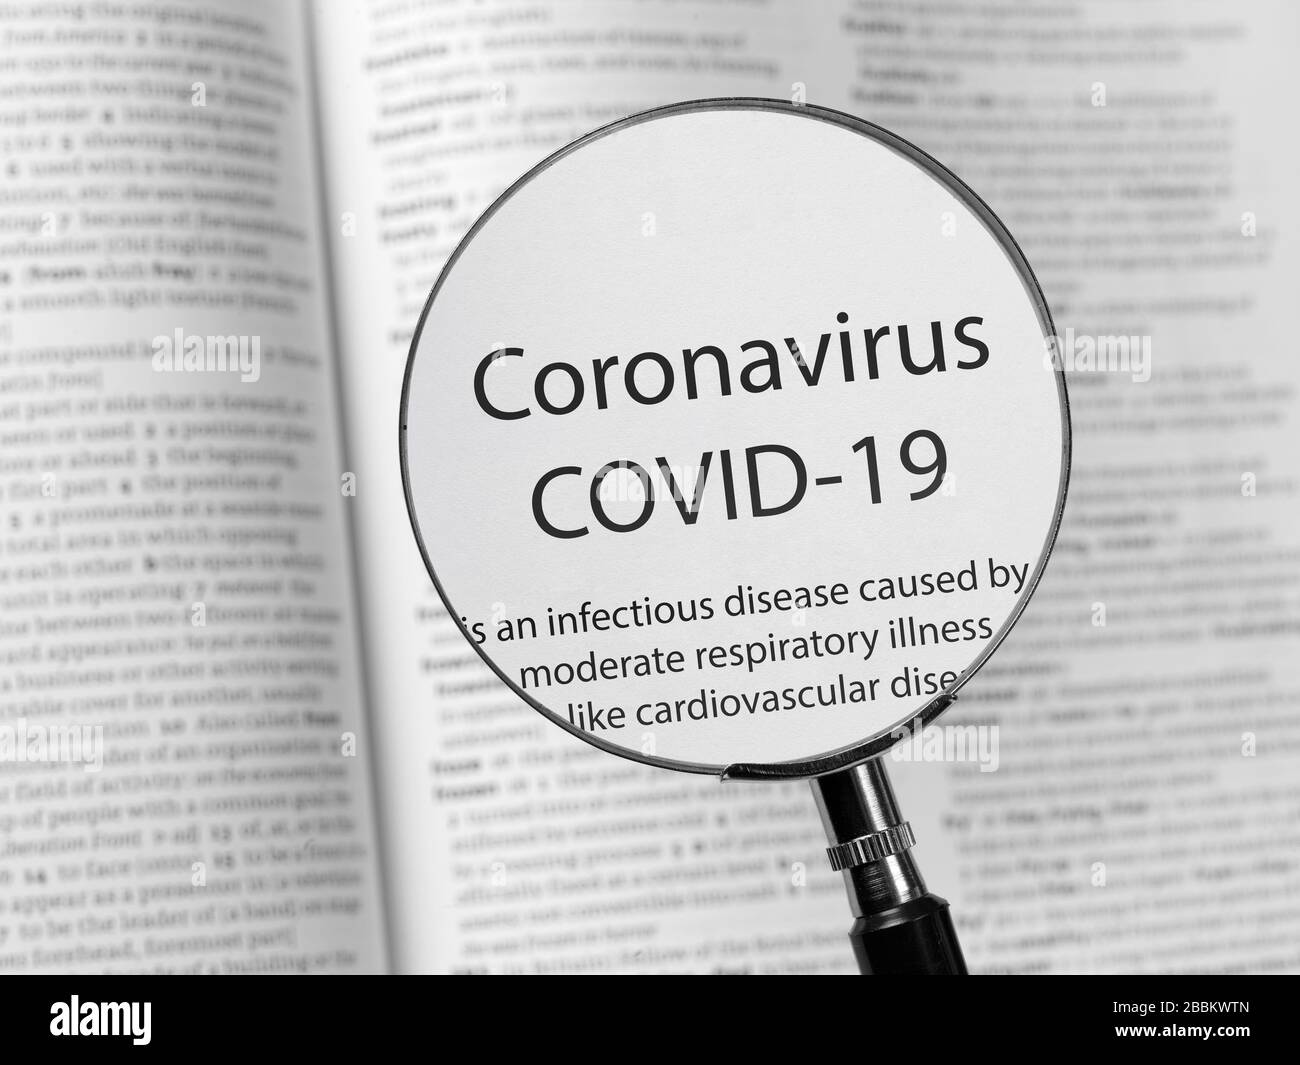 Coronavirus, Covid-19 pandemic in a dictionary format Stock Photo